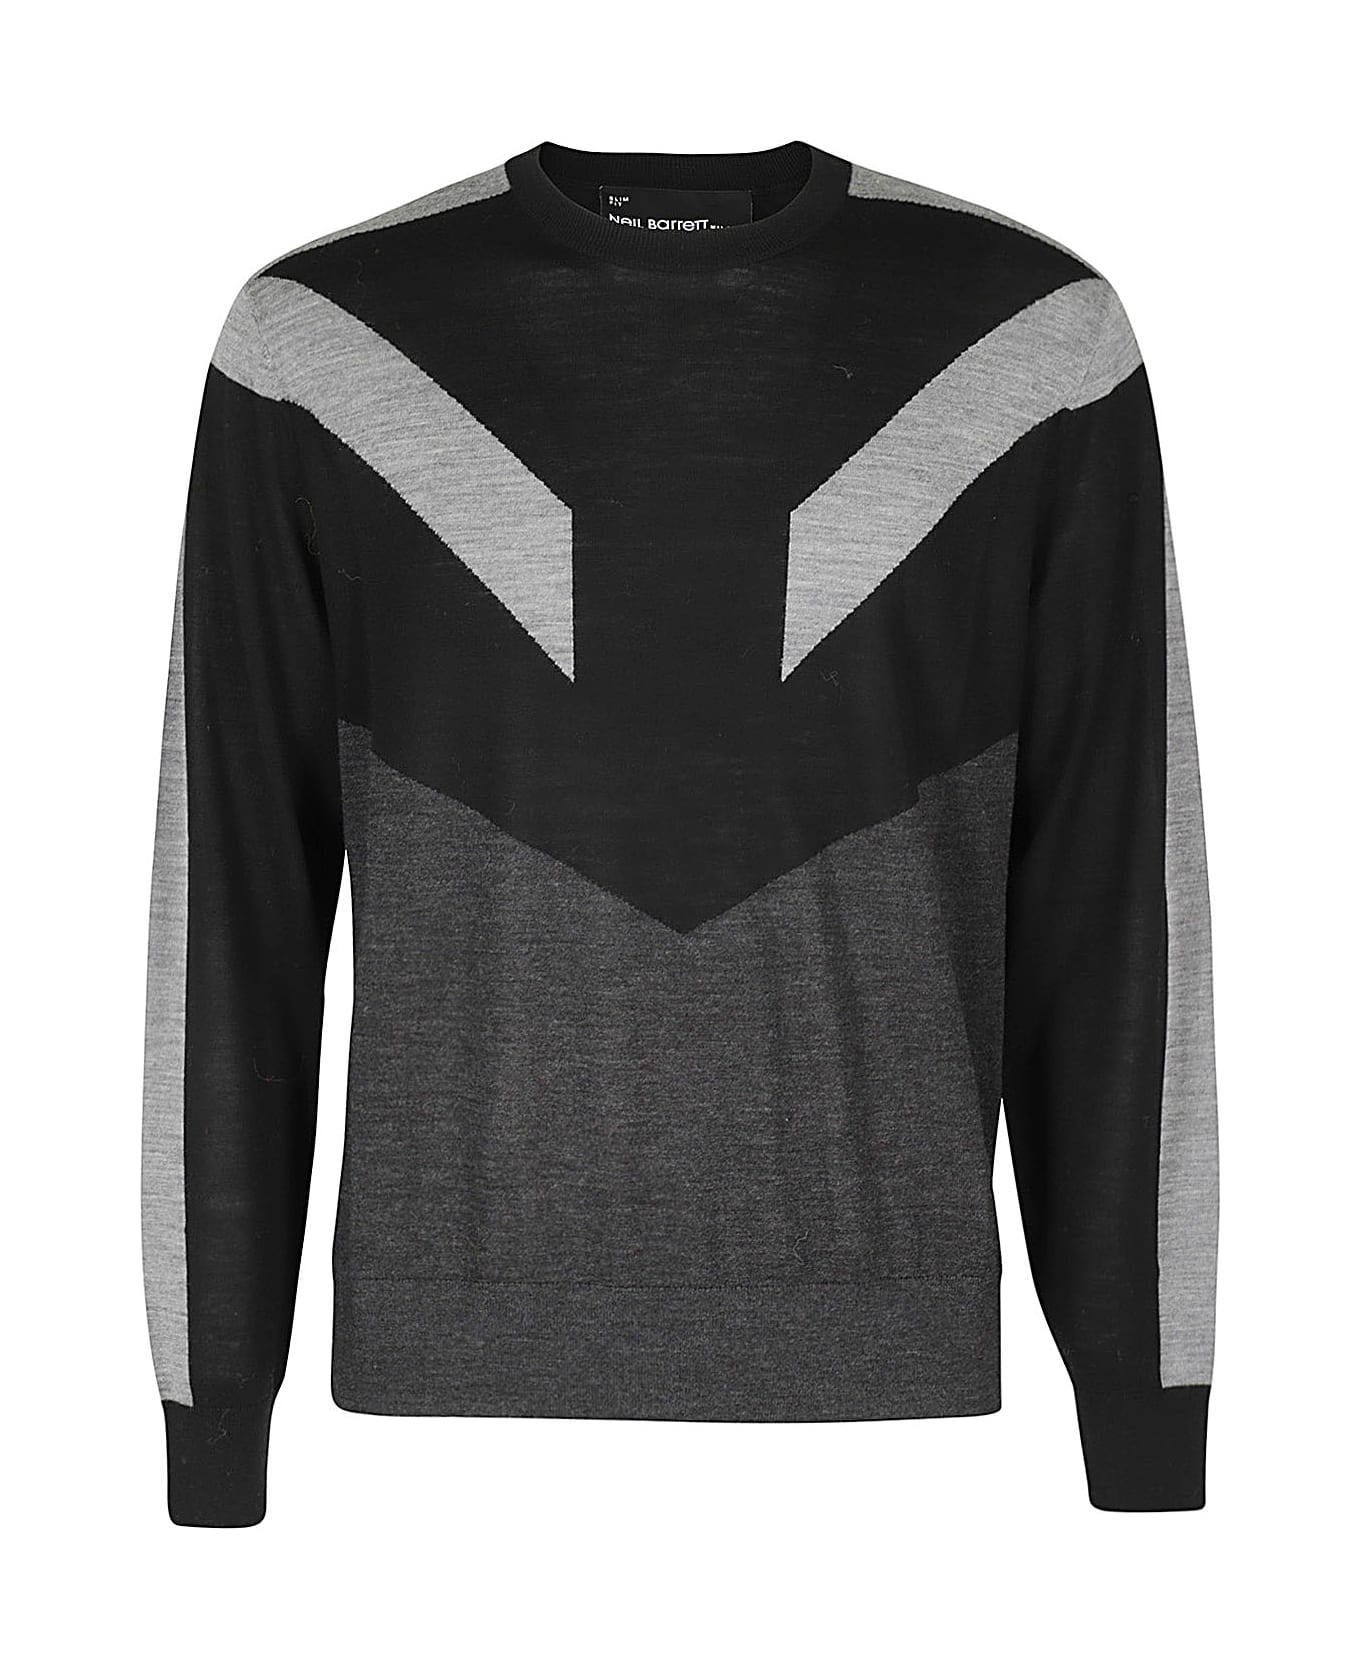 Neil Barrett Modernist Wool Light Sweater - Blacks フリース